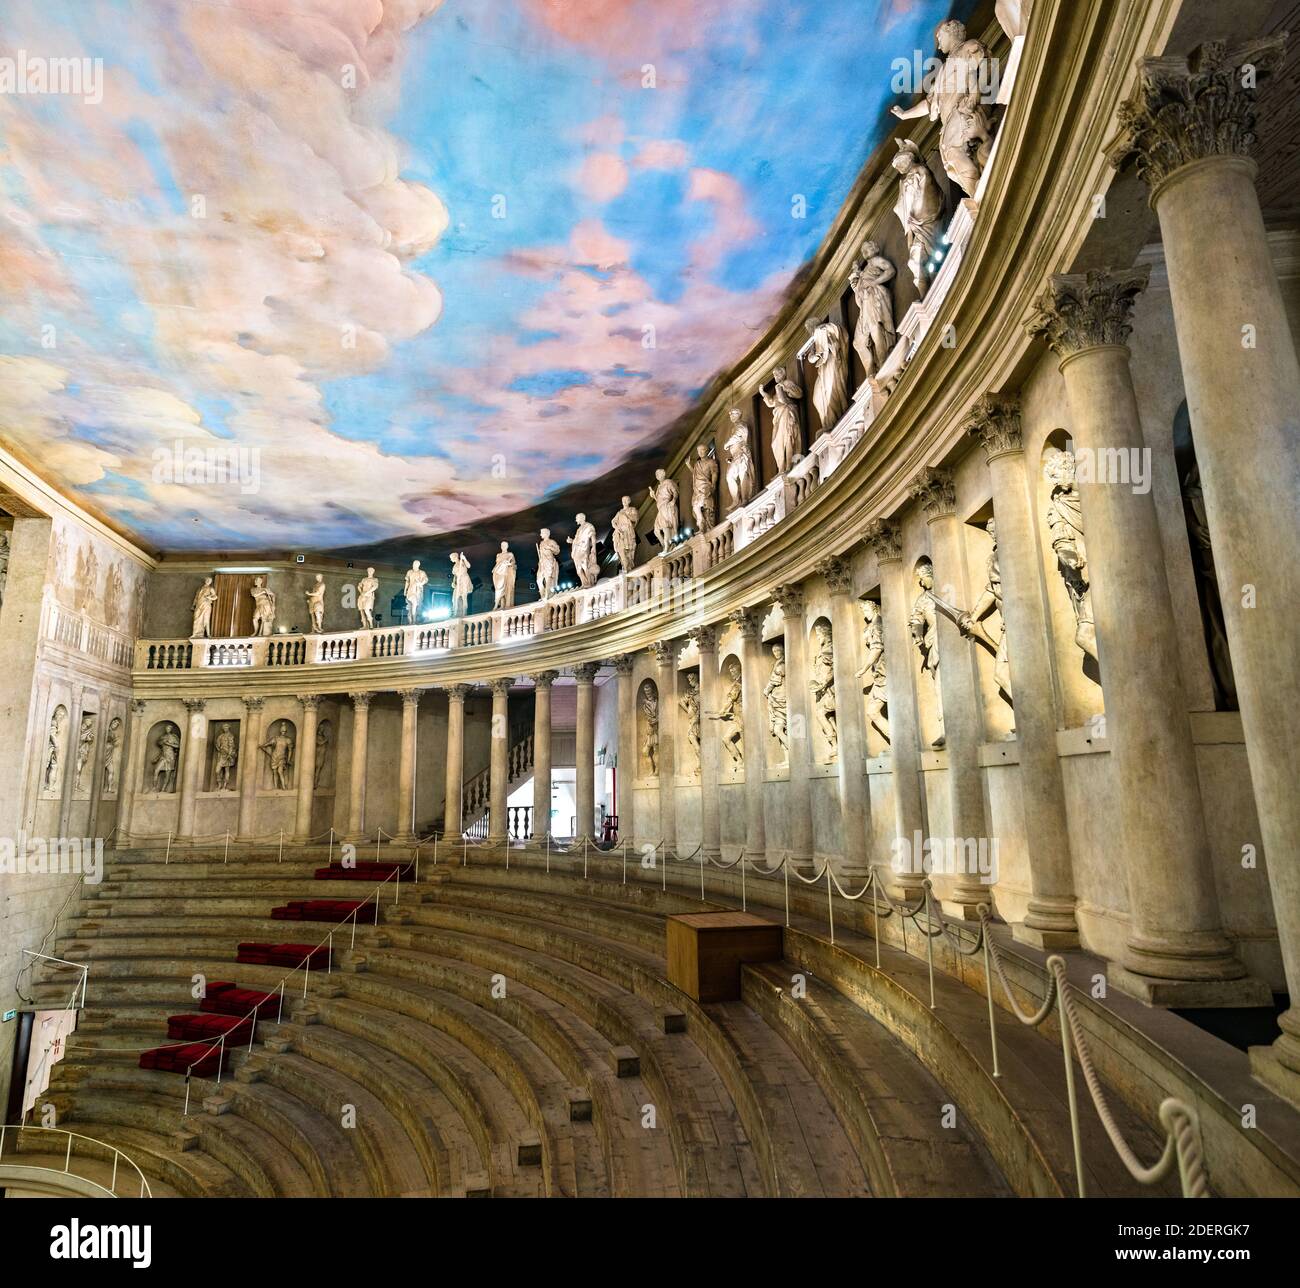 Teatro Olimpico in Vicenza, Italy Stock Photo - Alamy